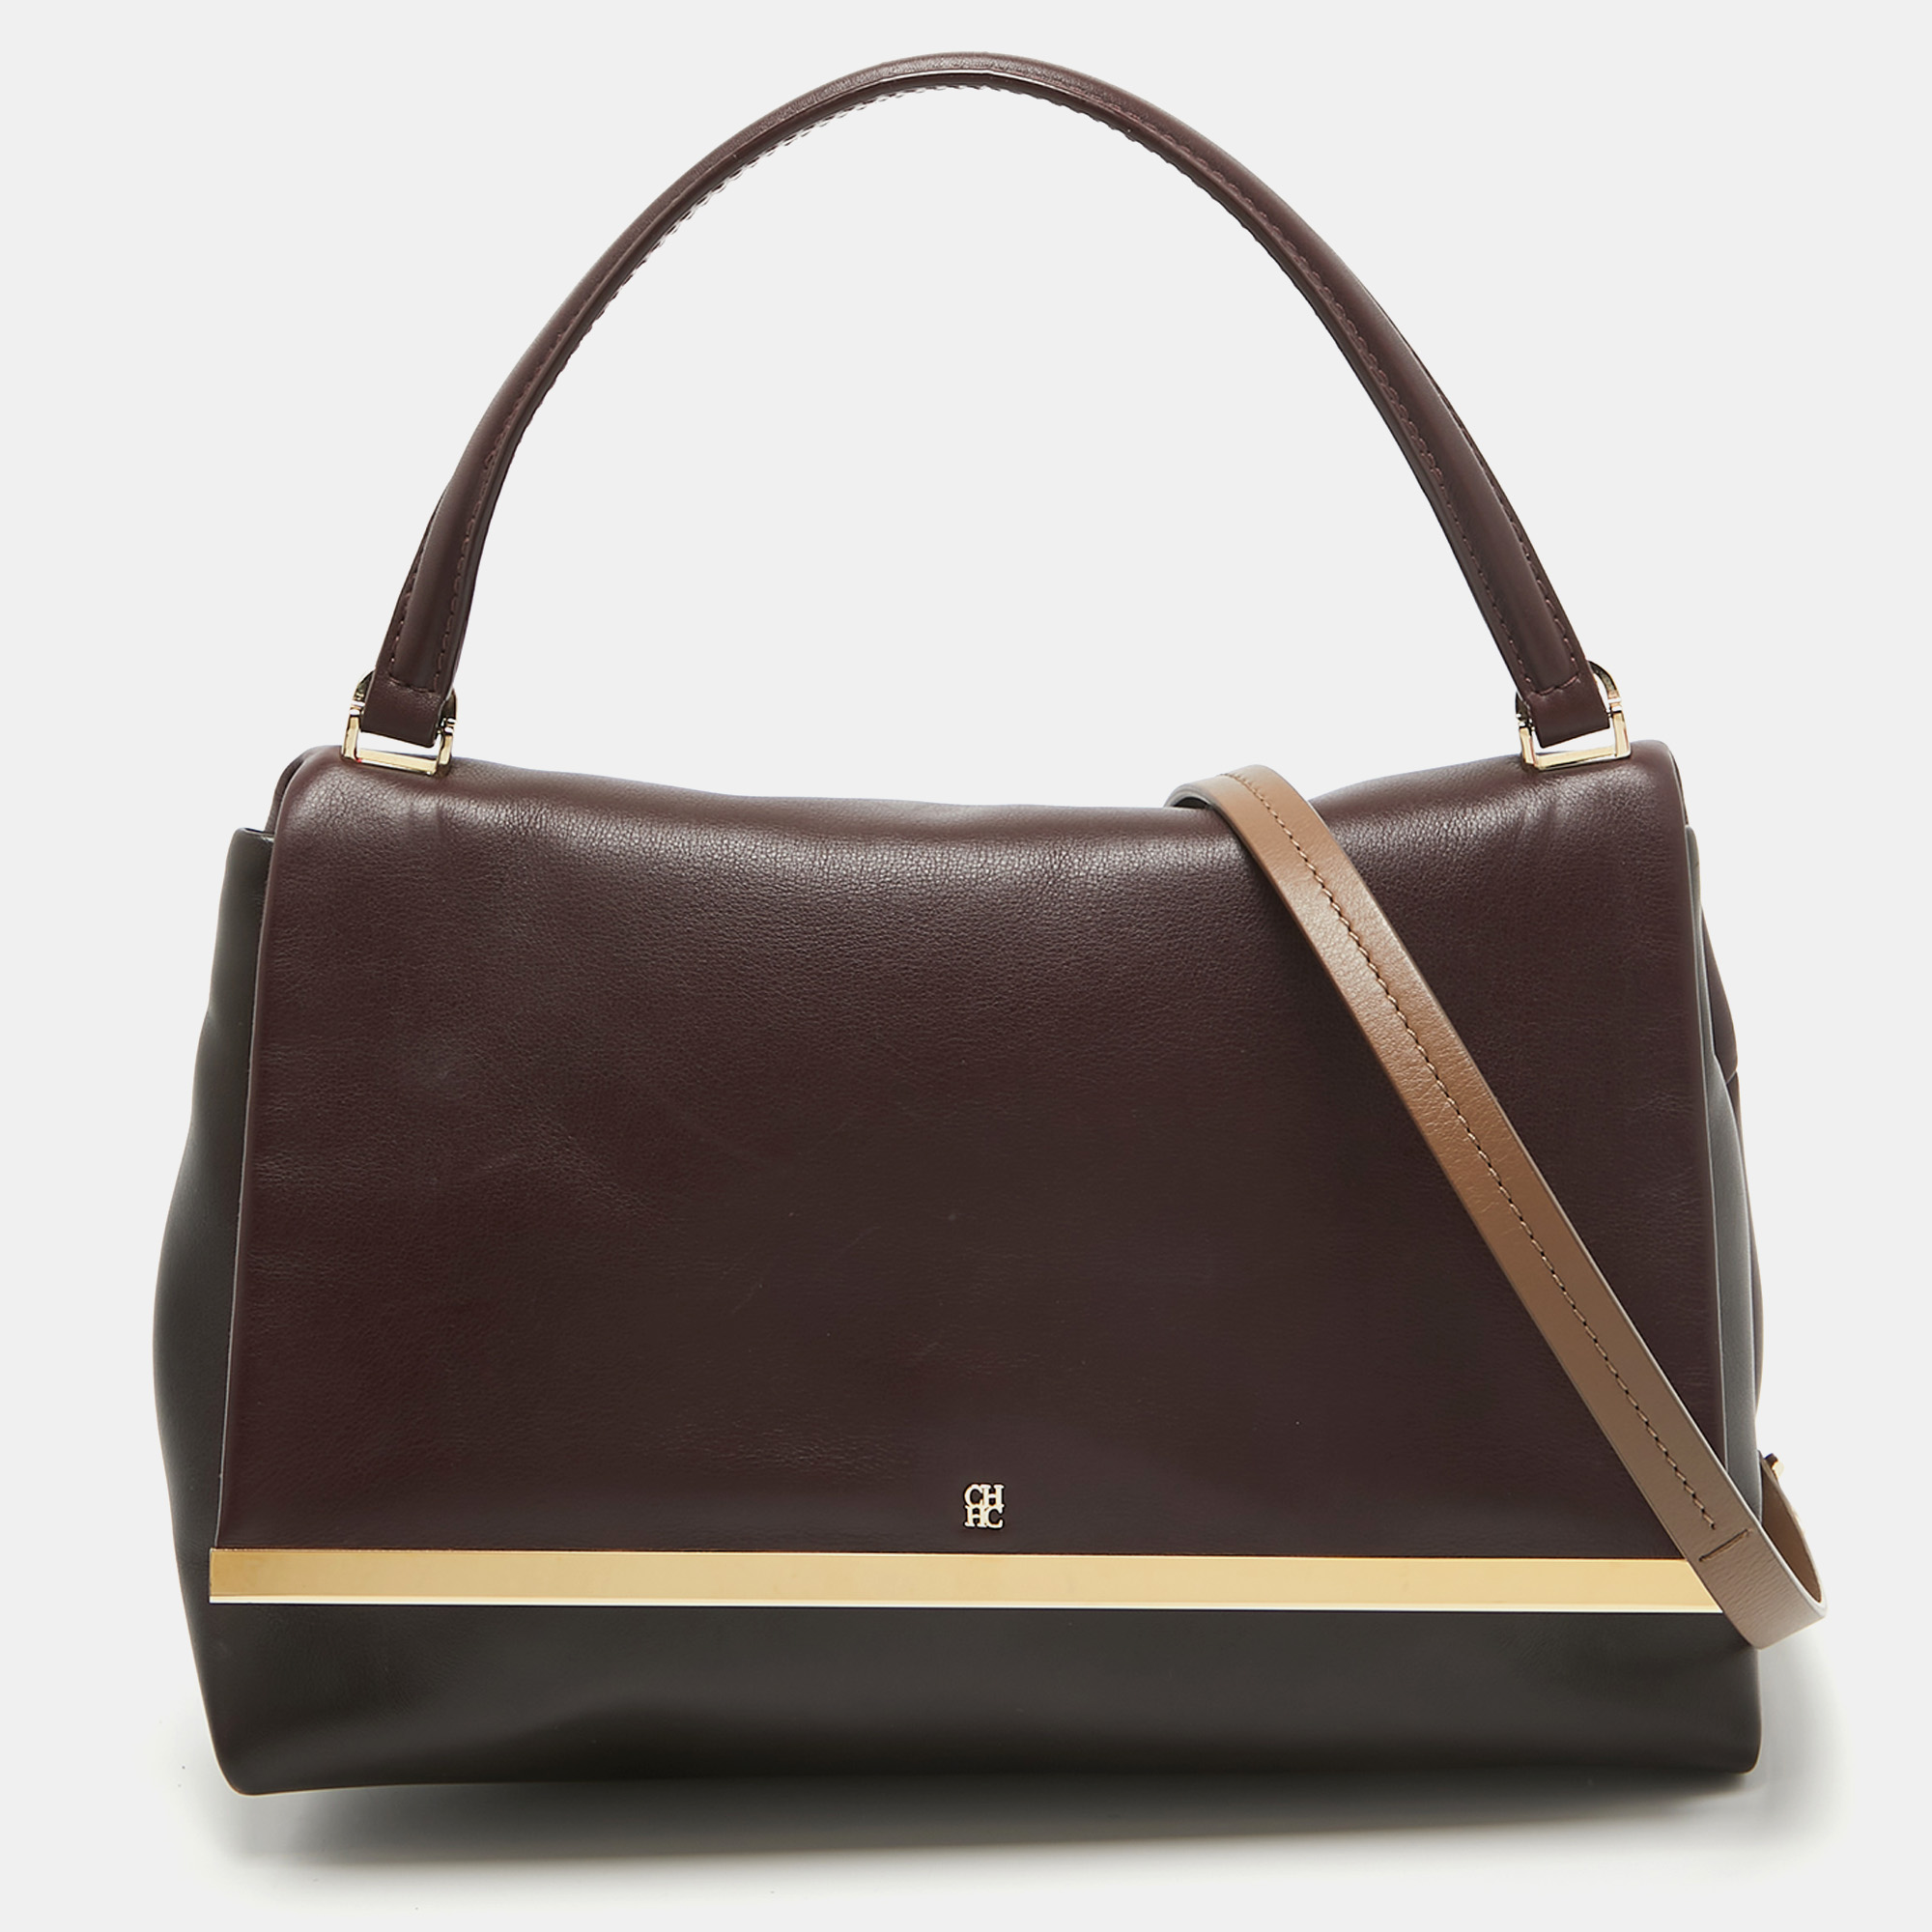 Carolina herrera burgundy/brown leather camelot top handle bag